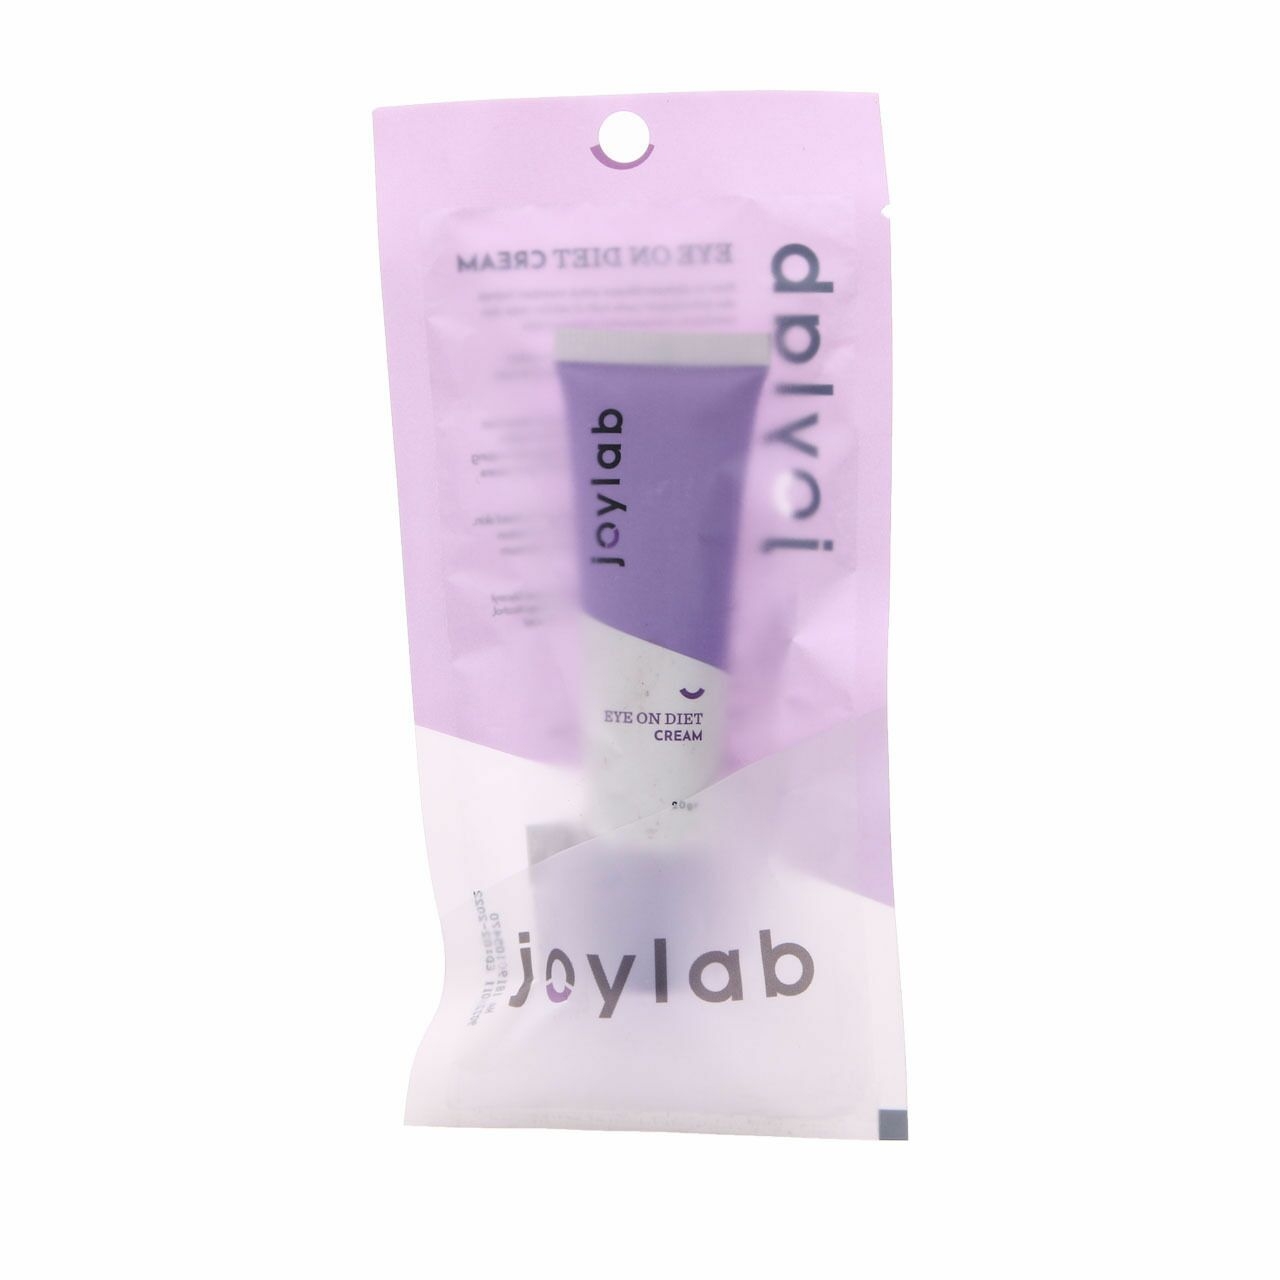 Joylab Eye On Diet Cream Skin Care